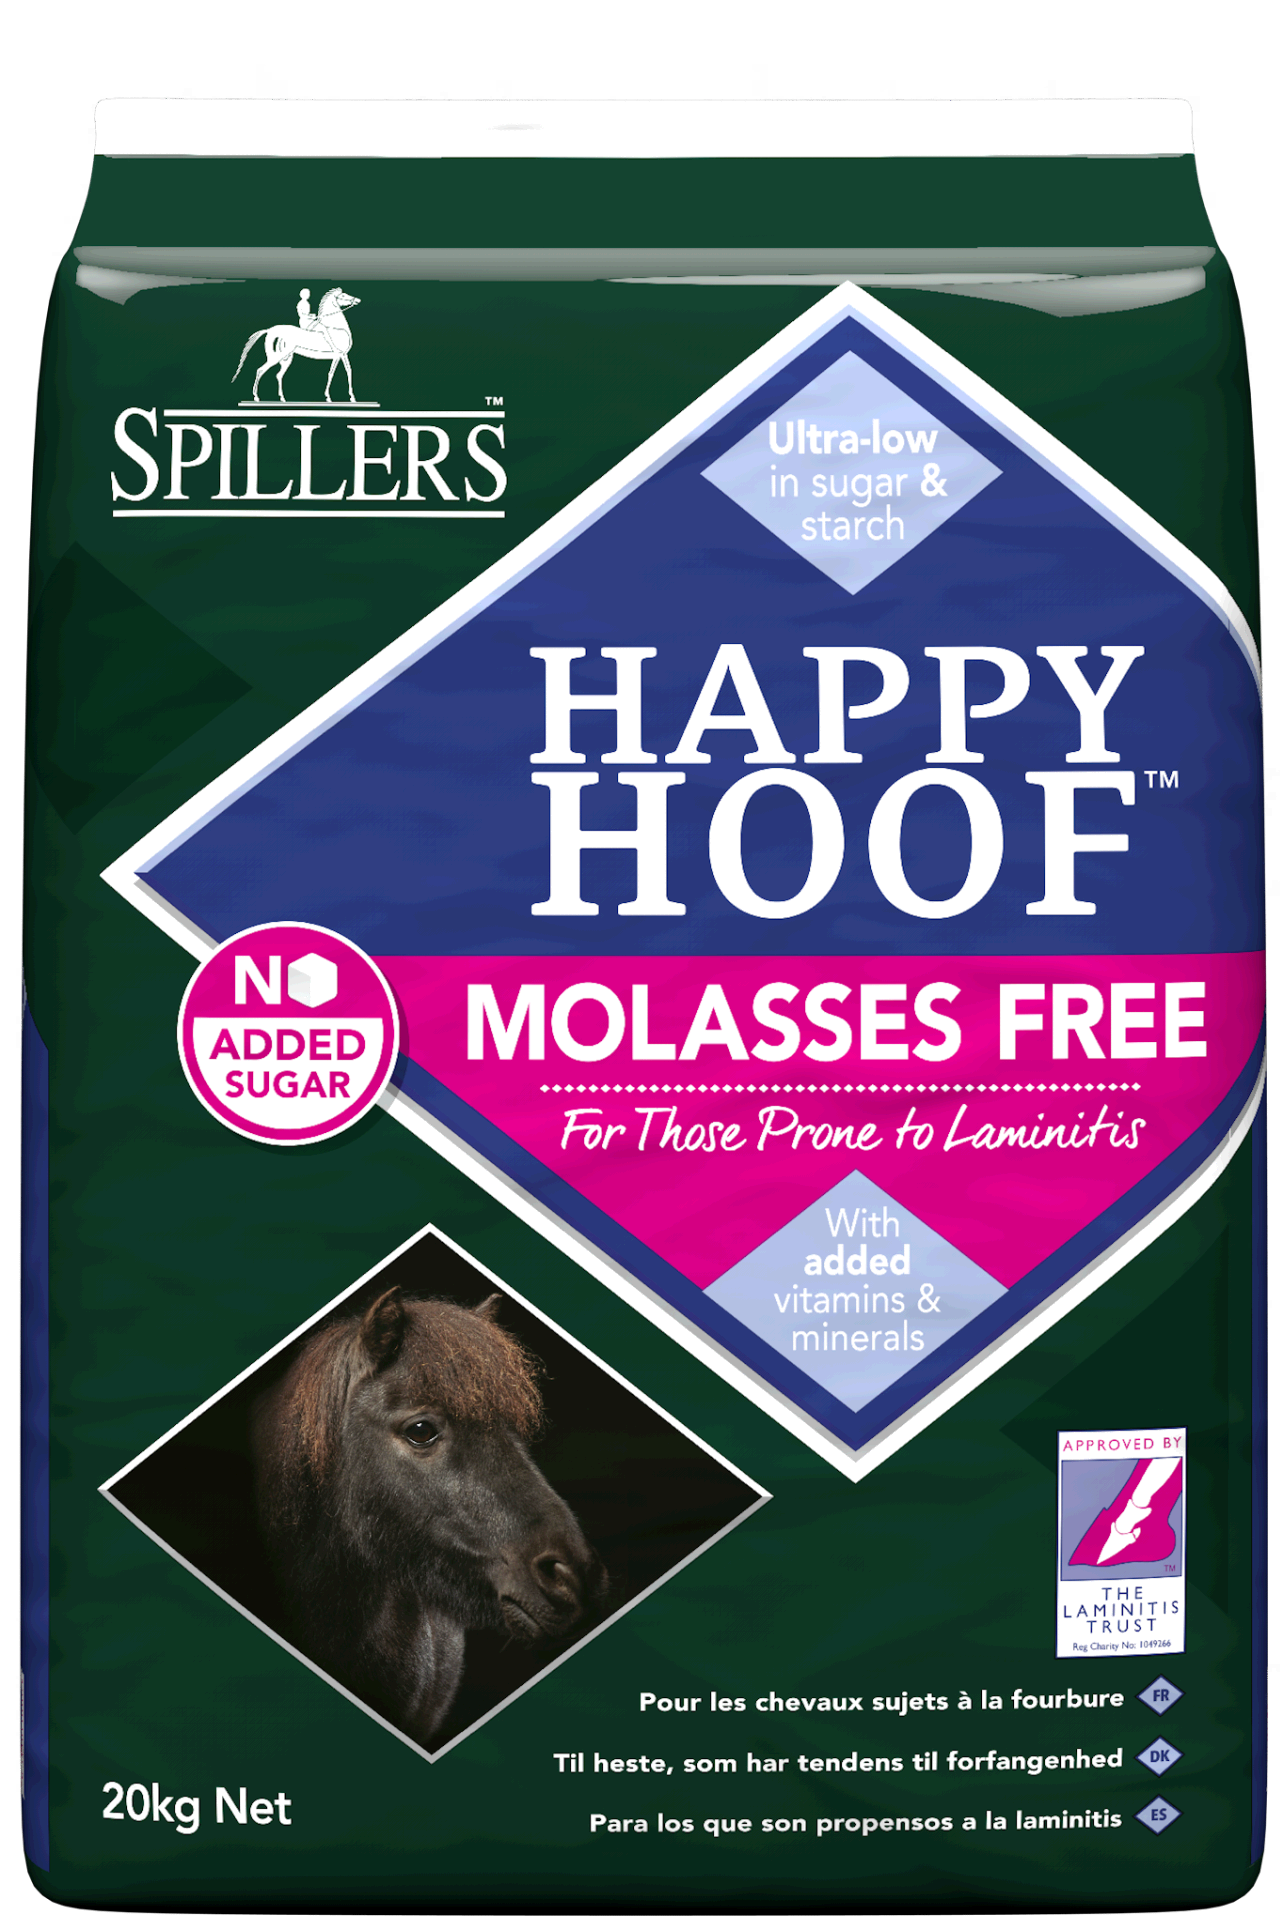 SPILLERS HAPPY HOOF Molasses Free